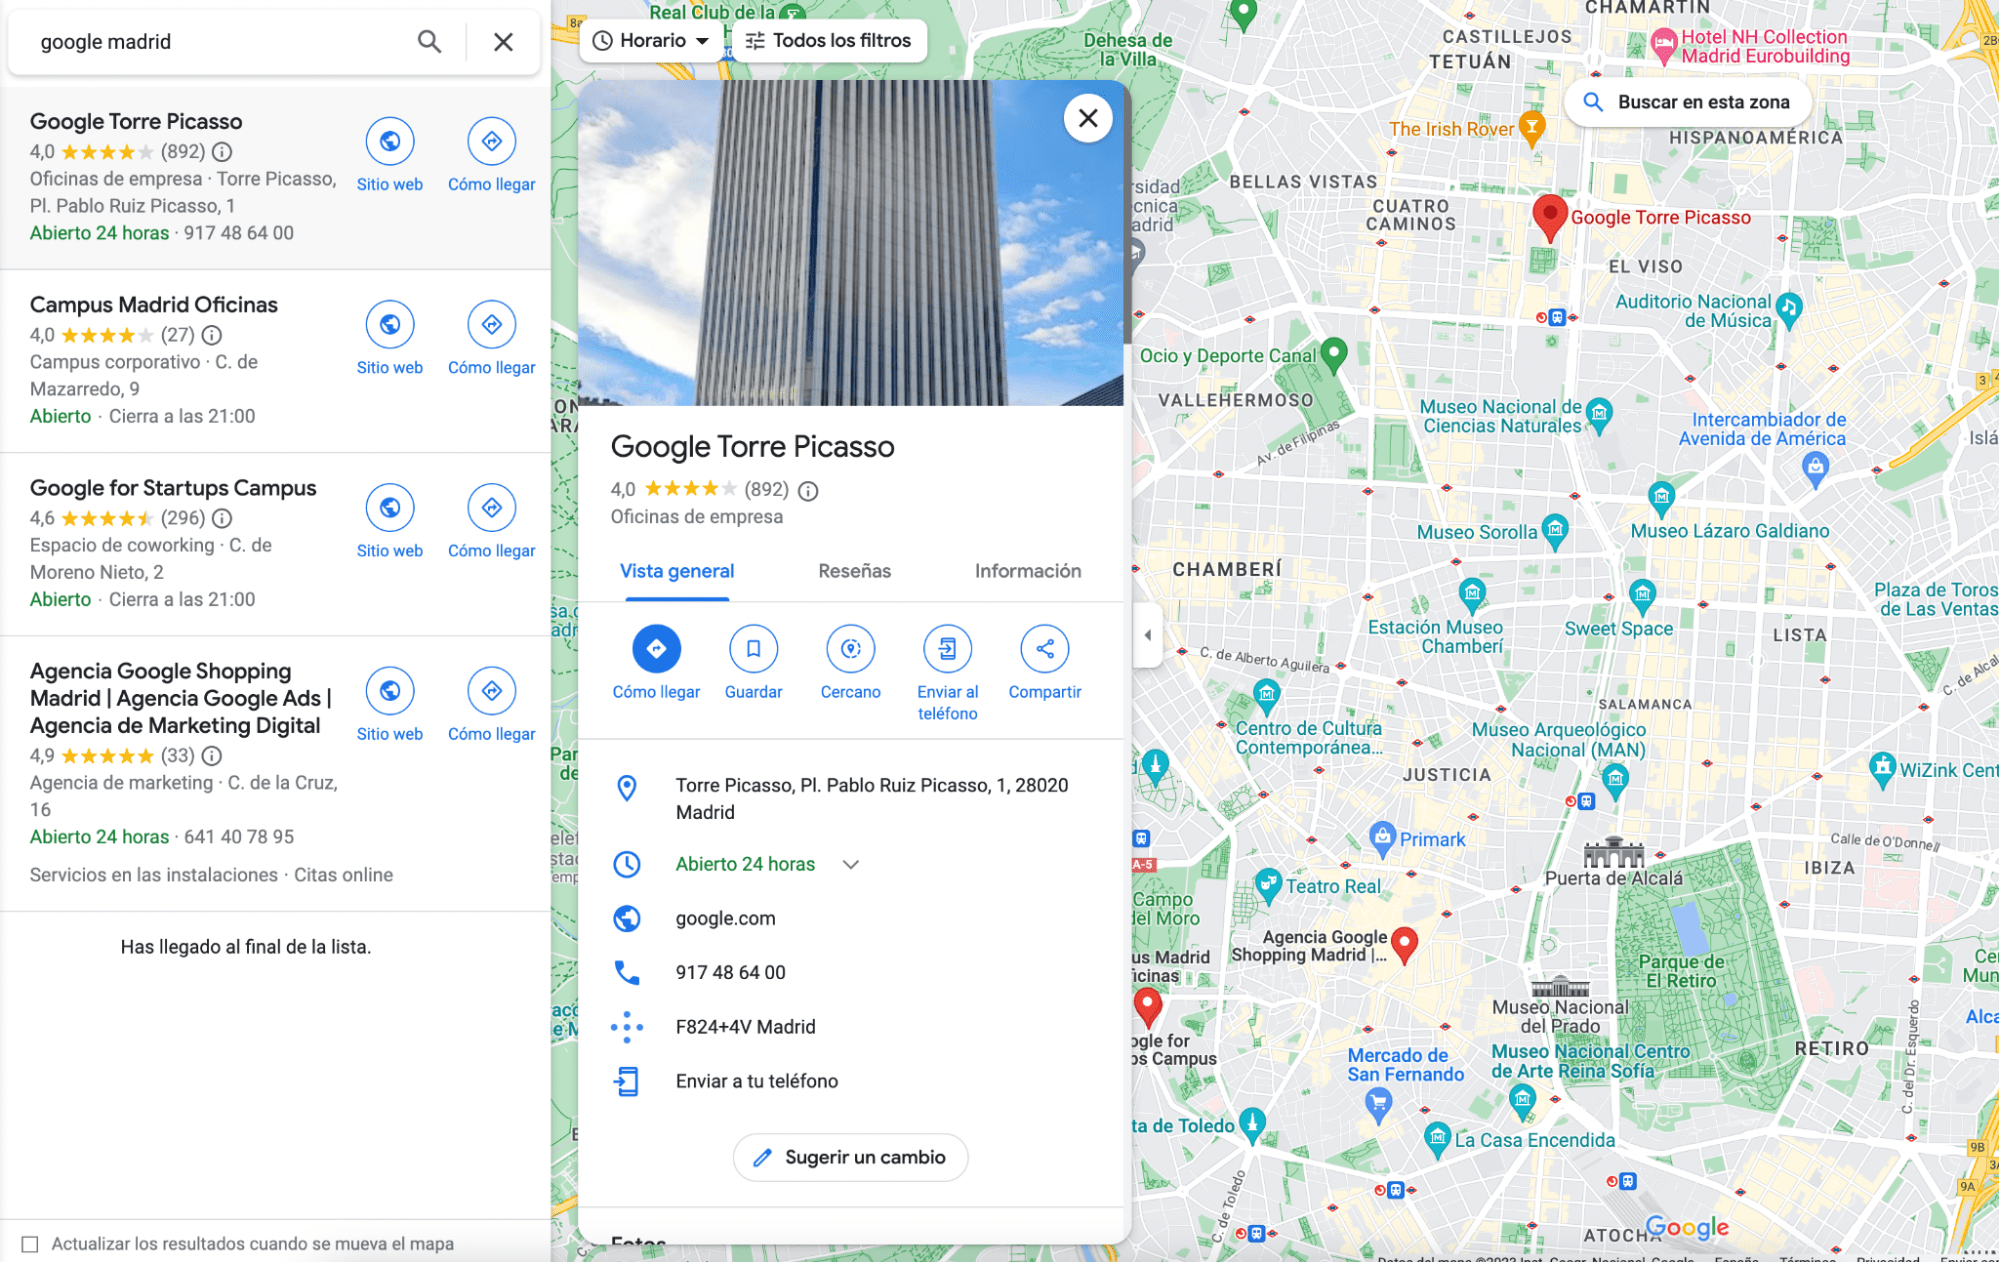  Ejemplo de Perfil de Empresa de Google con la oficina de Google en Madrid.